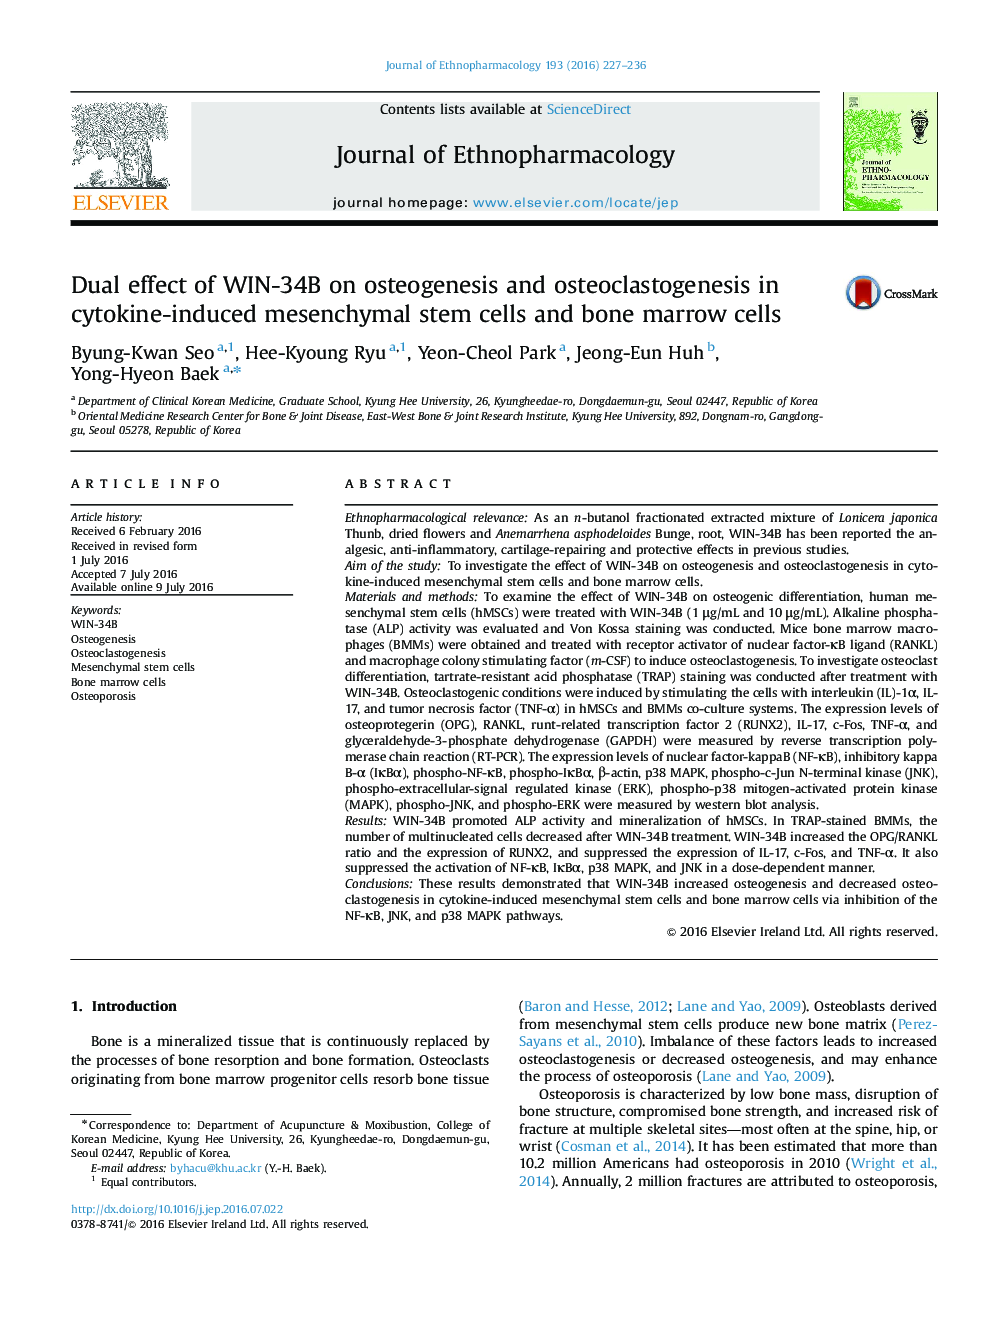 Dual effect of WIN-34B on osteogenesis and osteoclastogenesis in cytokine-induced mesenchymal stem cells and bone marrow cells